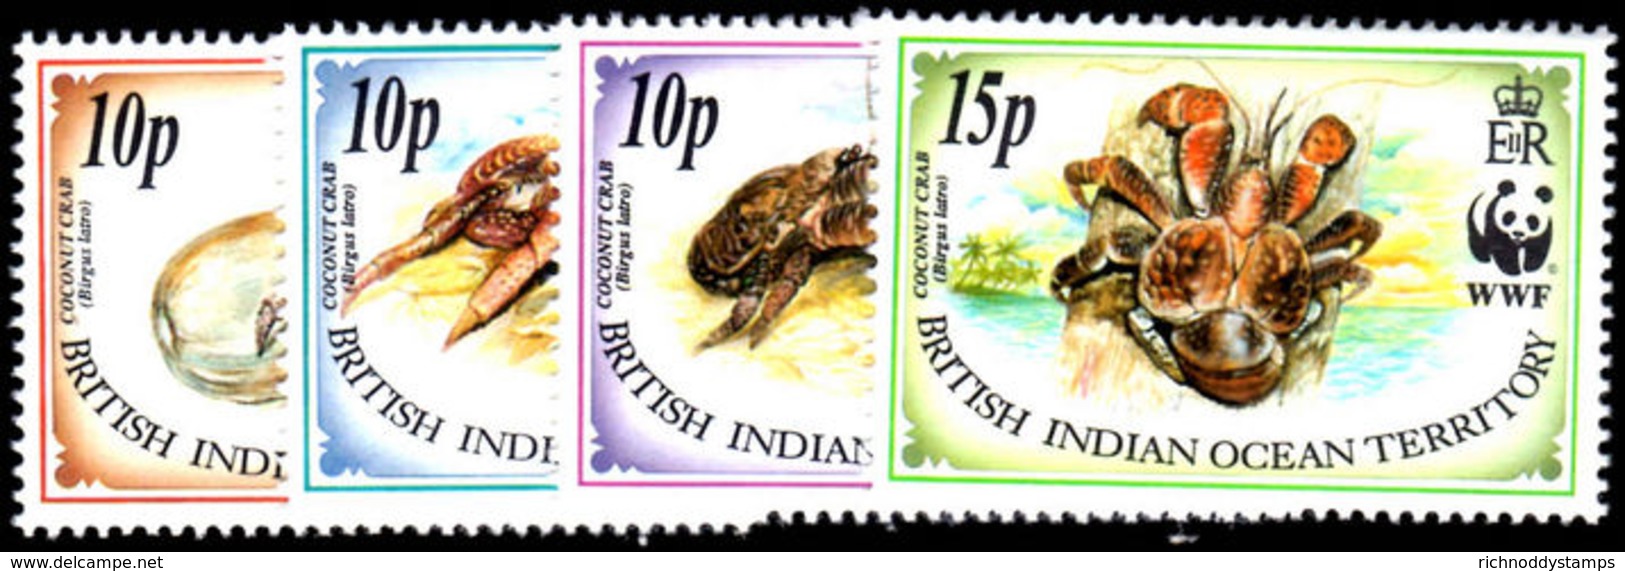 British Indian Ocean Territory 1993 Coconut Crab Unmounted Mint. - British Indian Ocean Territory (BIOT)